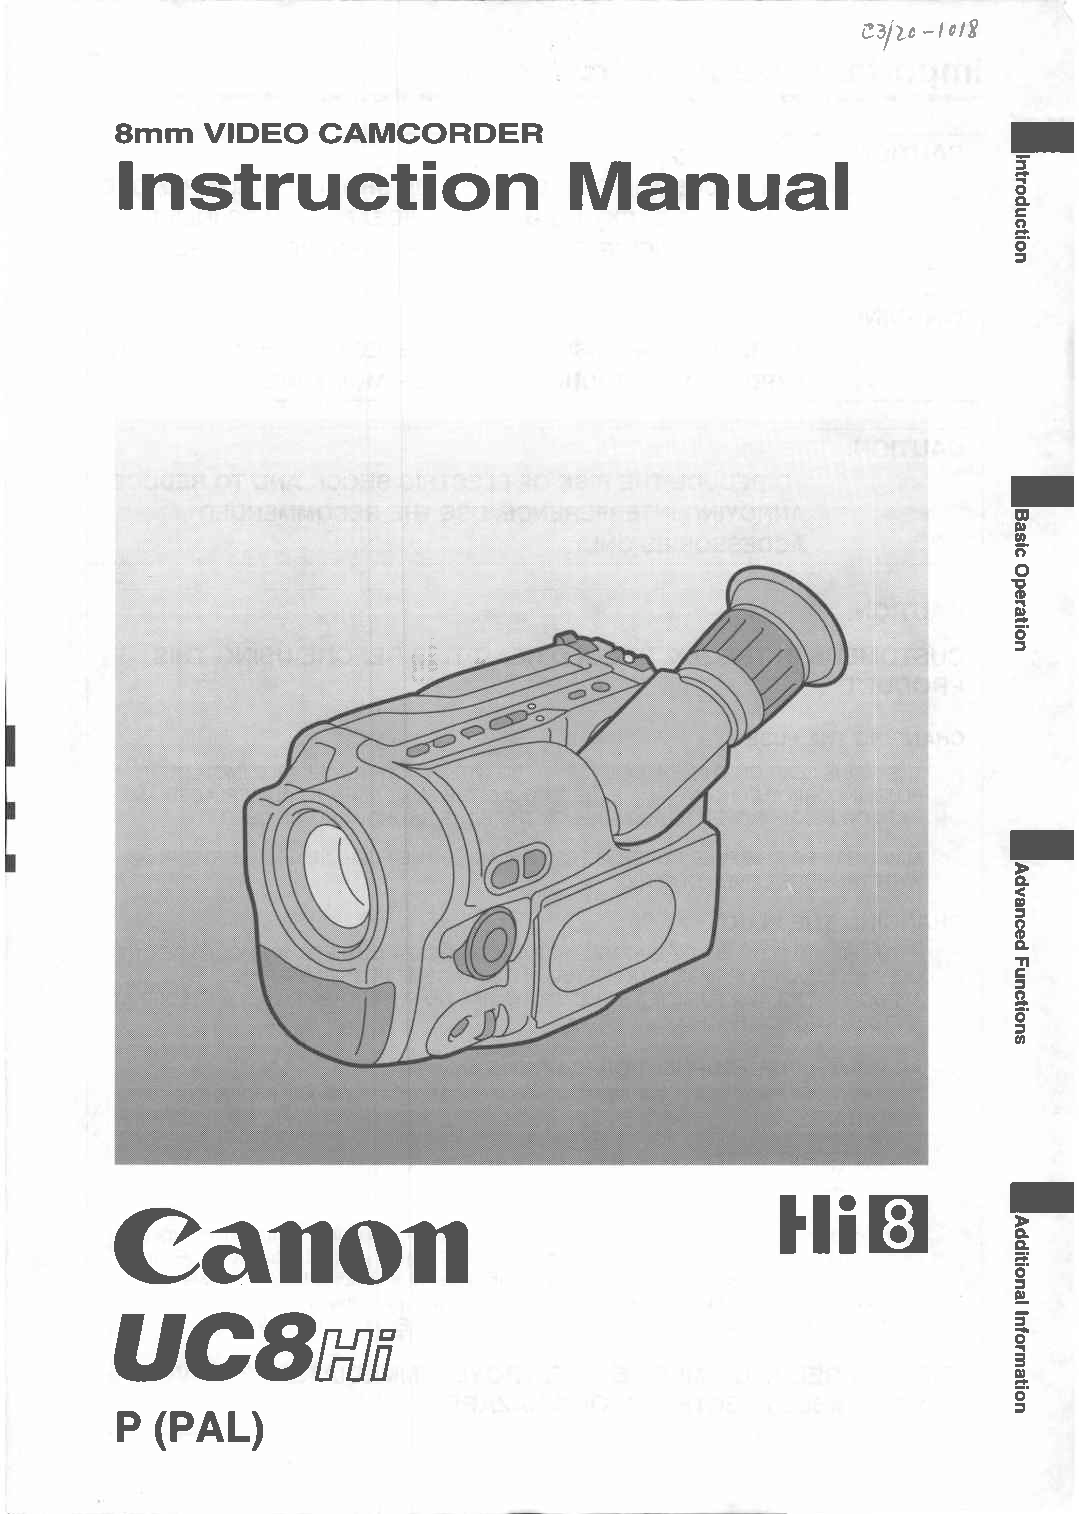 Canon UC 8 Hi User Manual